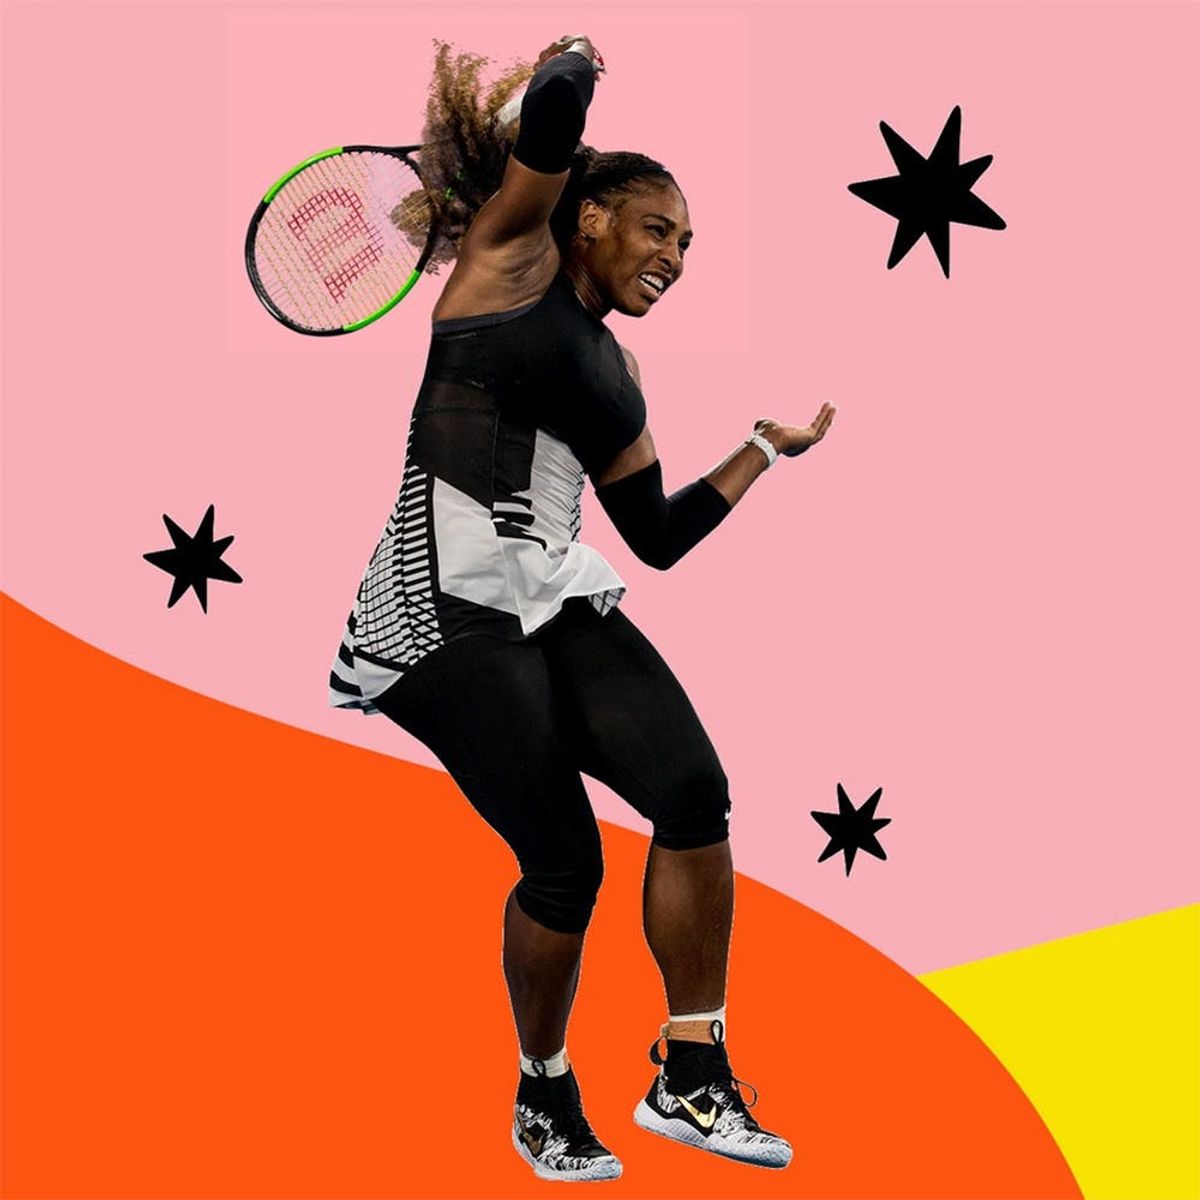 2017: The Year Women’s Tennis Got Woke